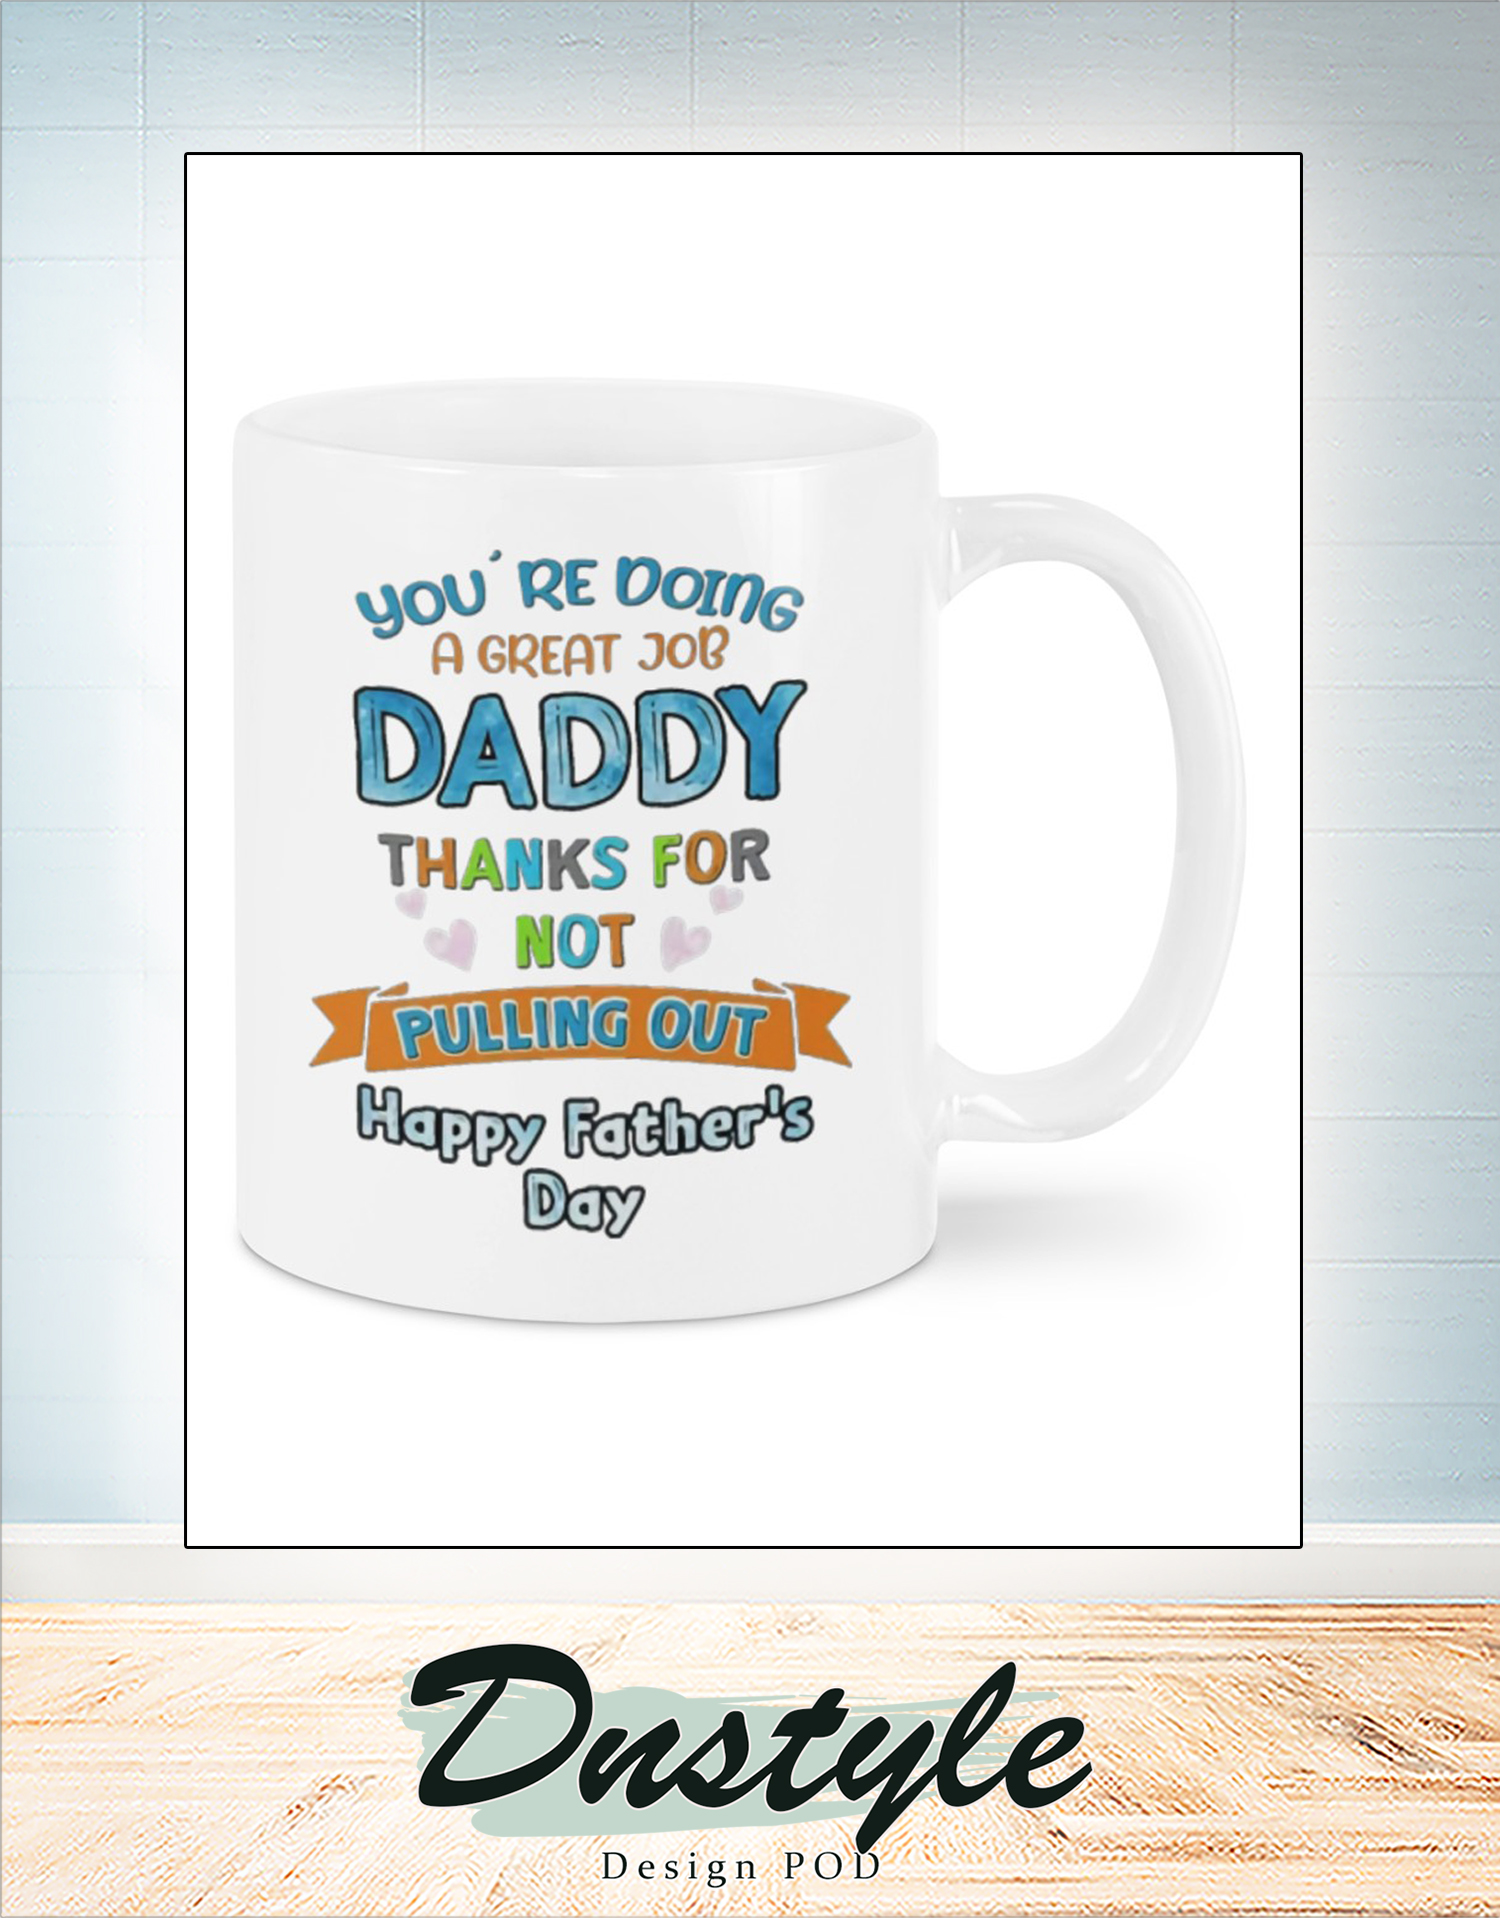 You're doing a great job daddy mug